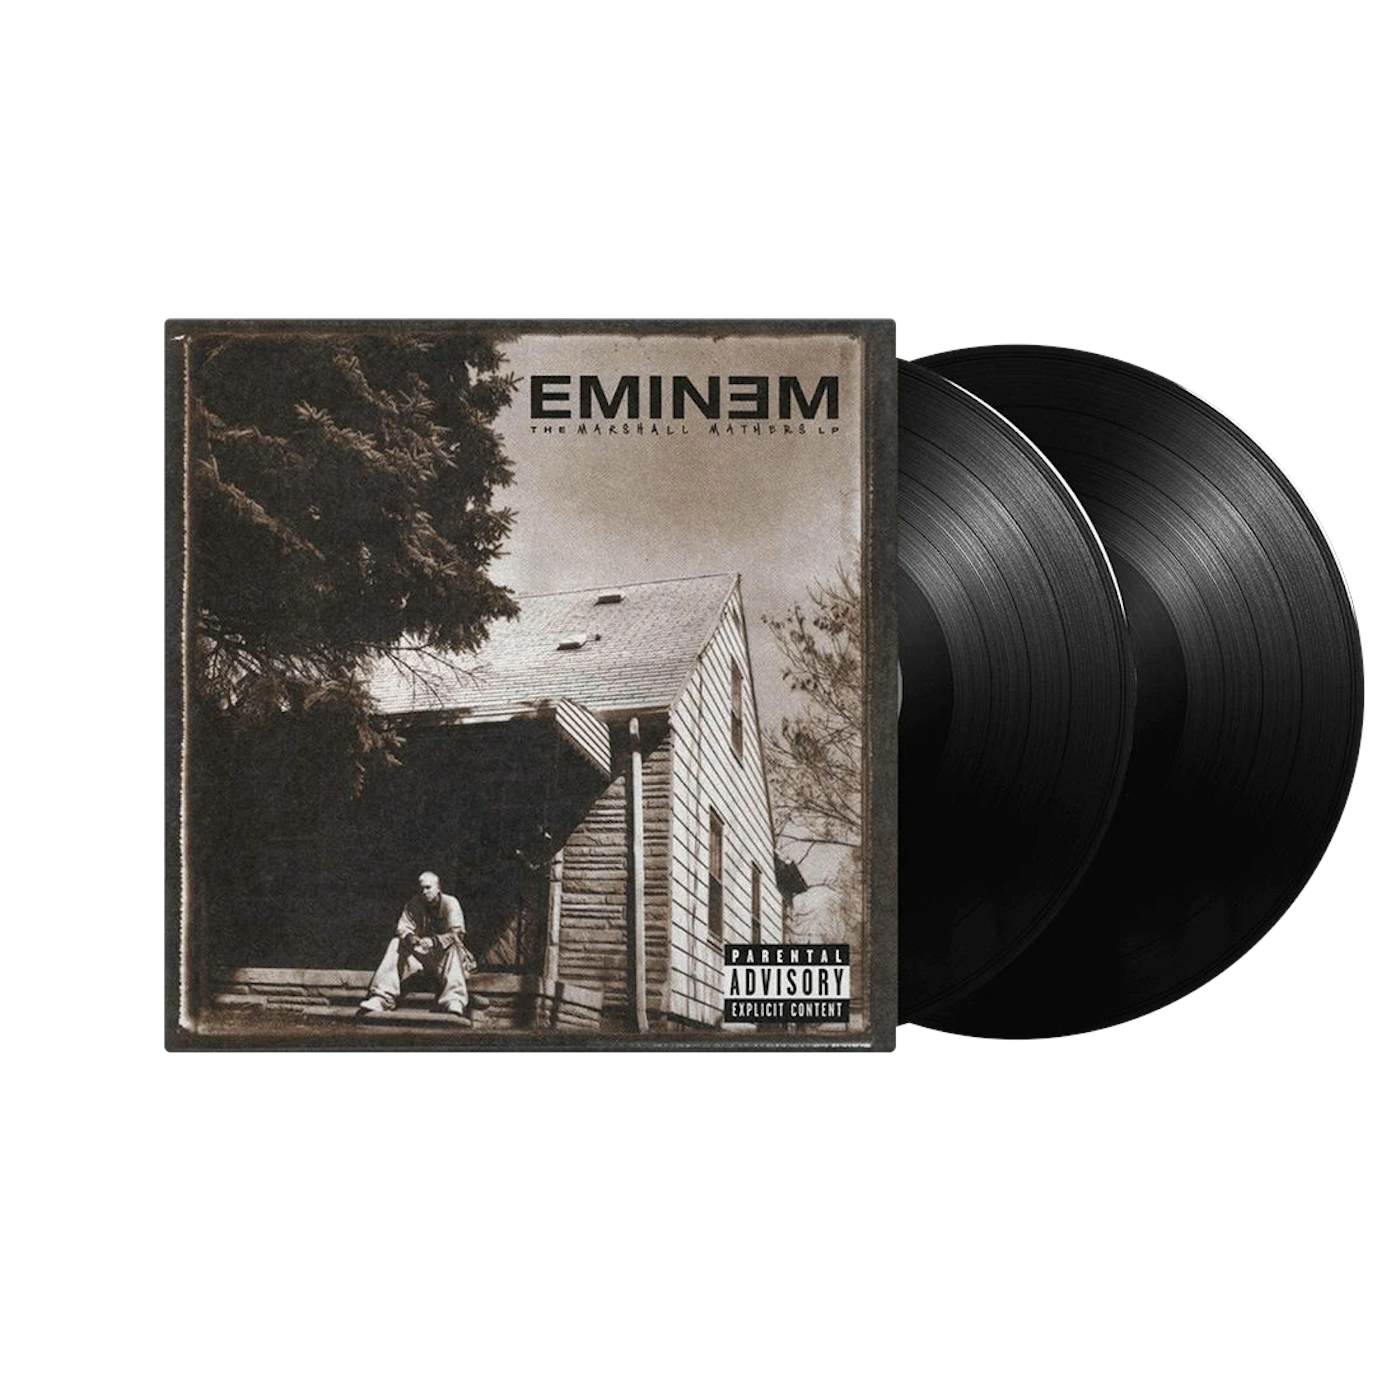 Eminem - The Marshall Mathers LP (Vinyl)